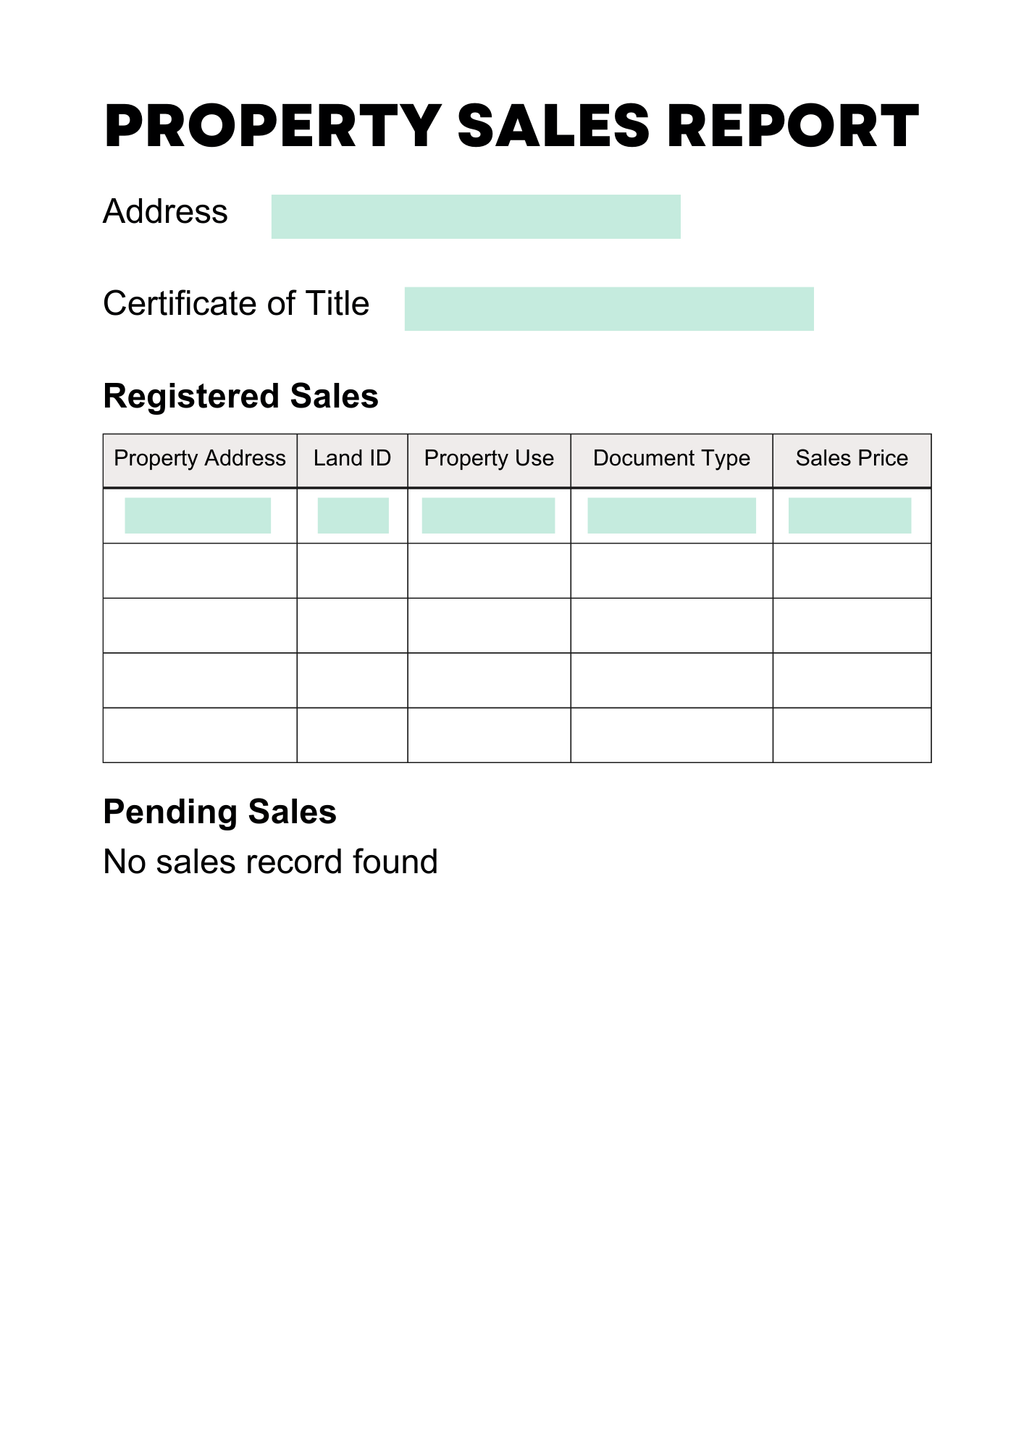 a visual representing a standard property sales report